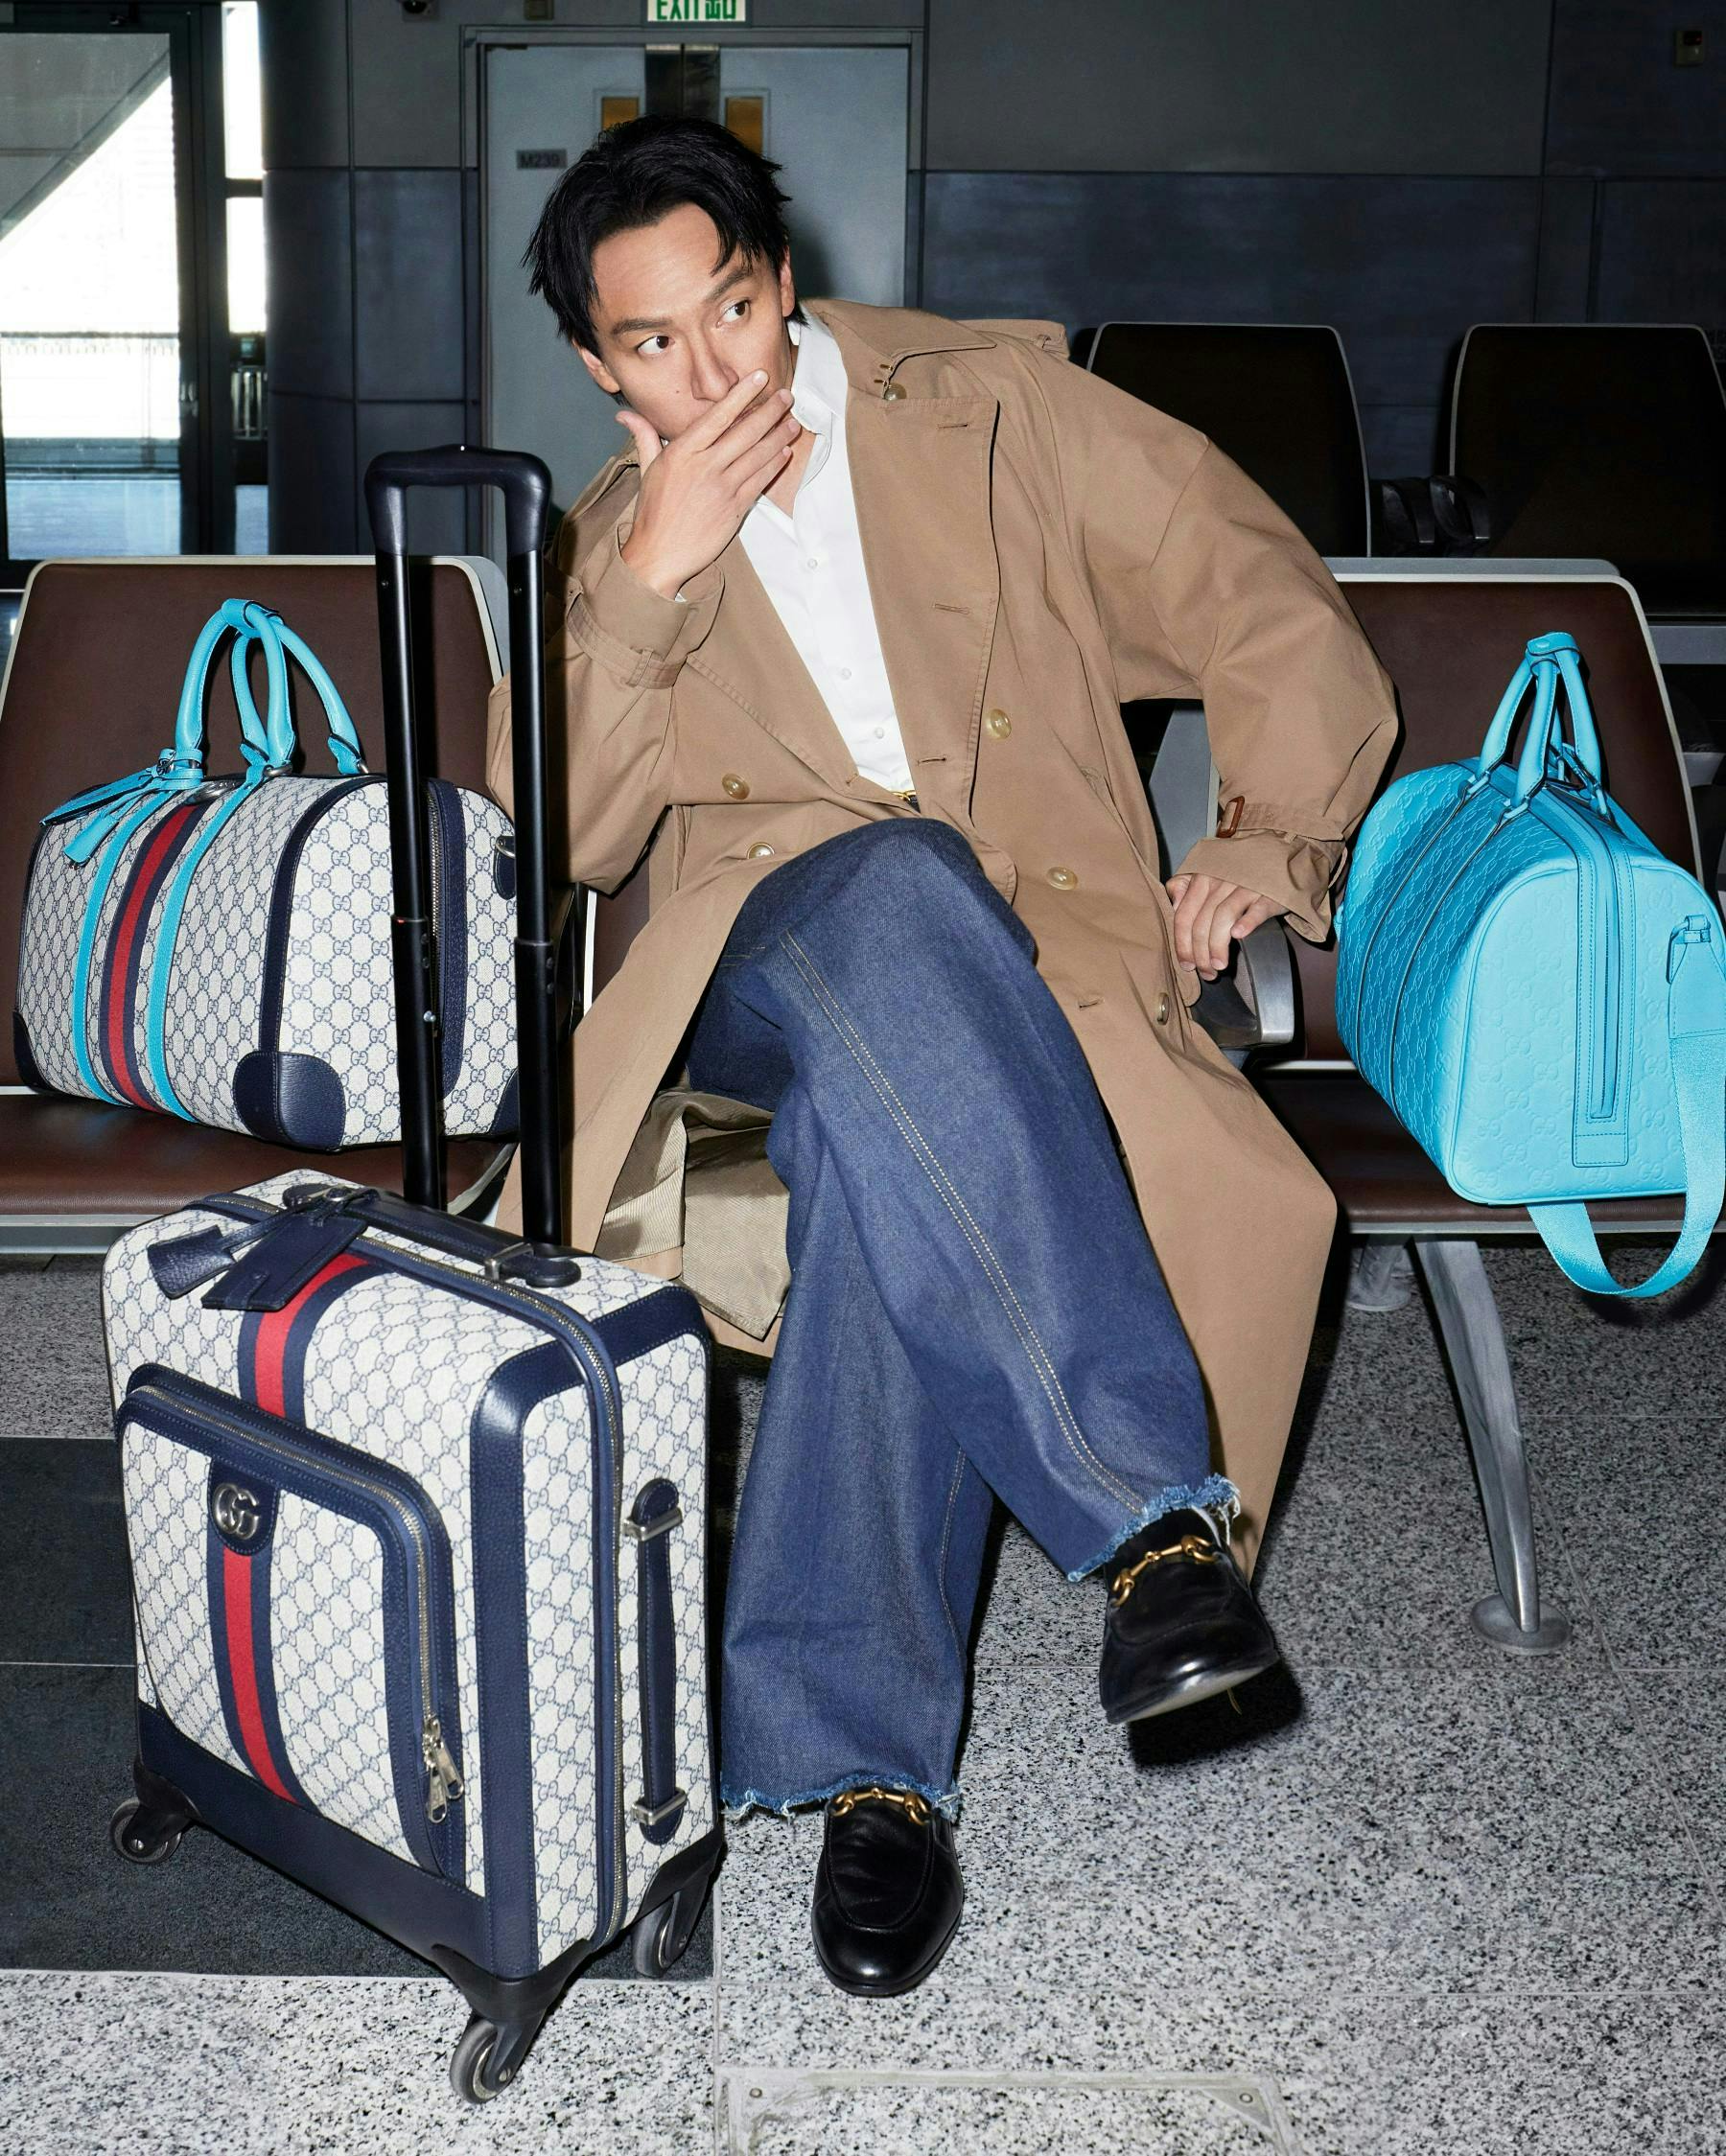 baggage bag handbag person clothing footwear shoe sitting coat jeans